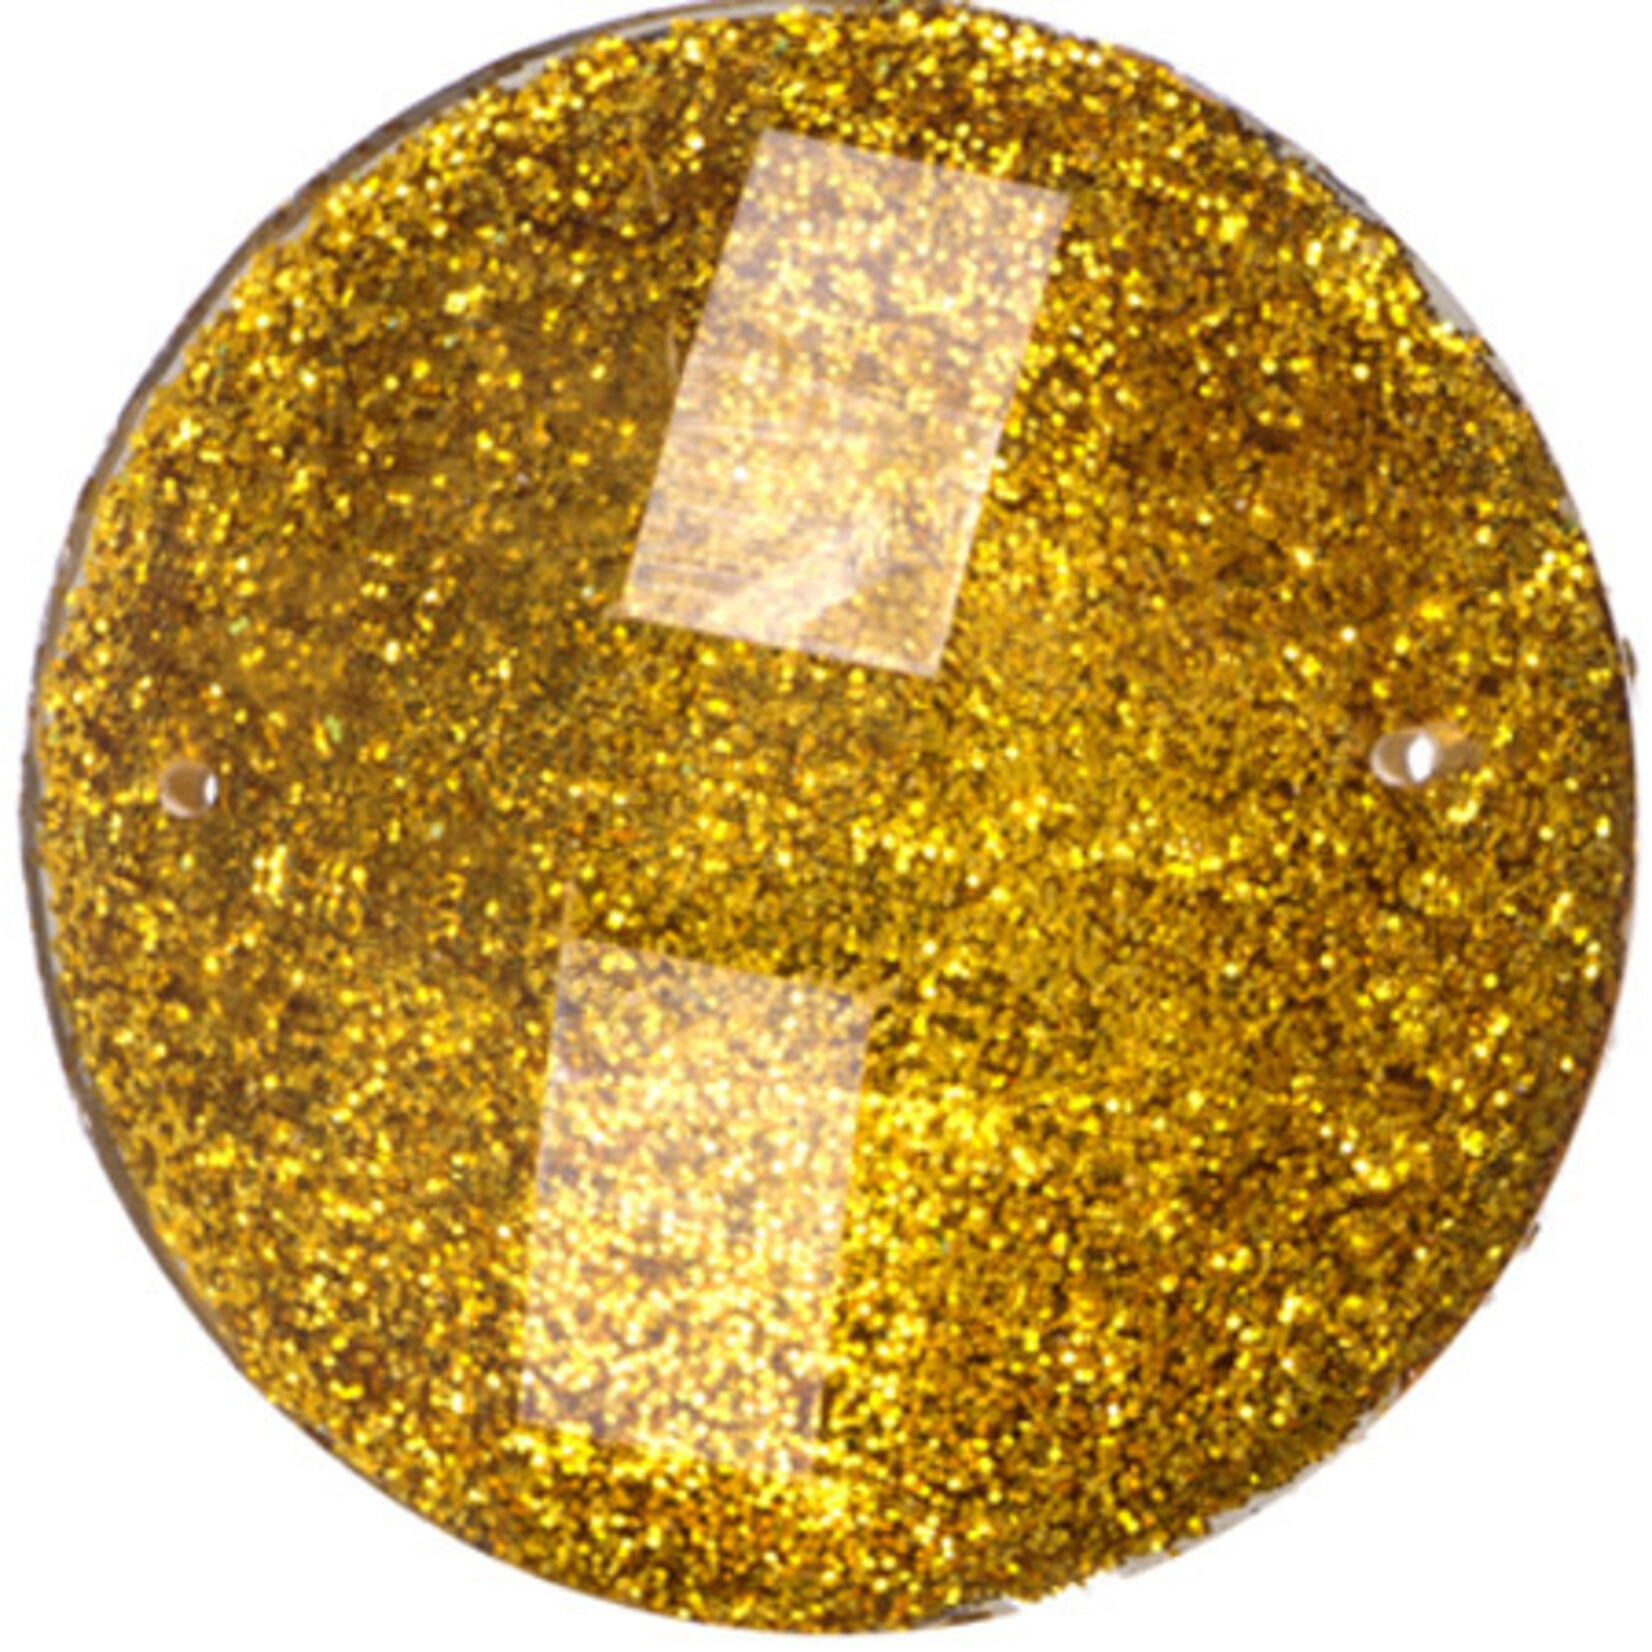 Resin Sew-on Glitter Stone 33mm Round